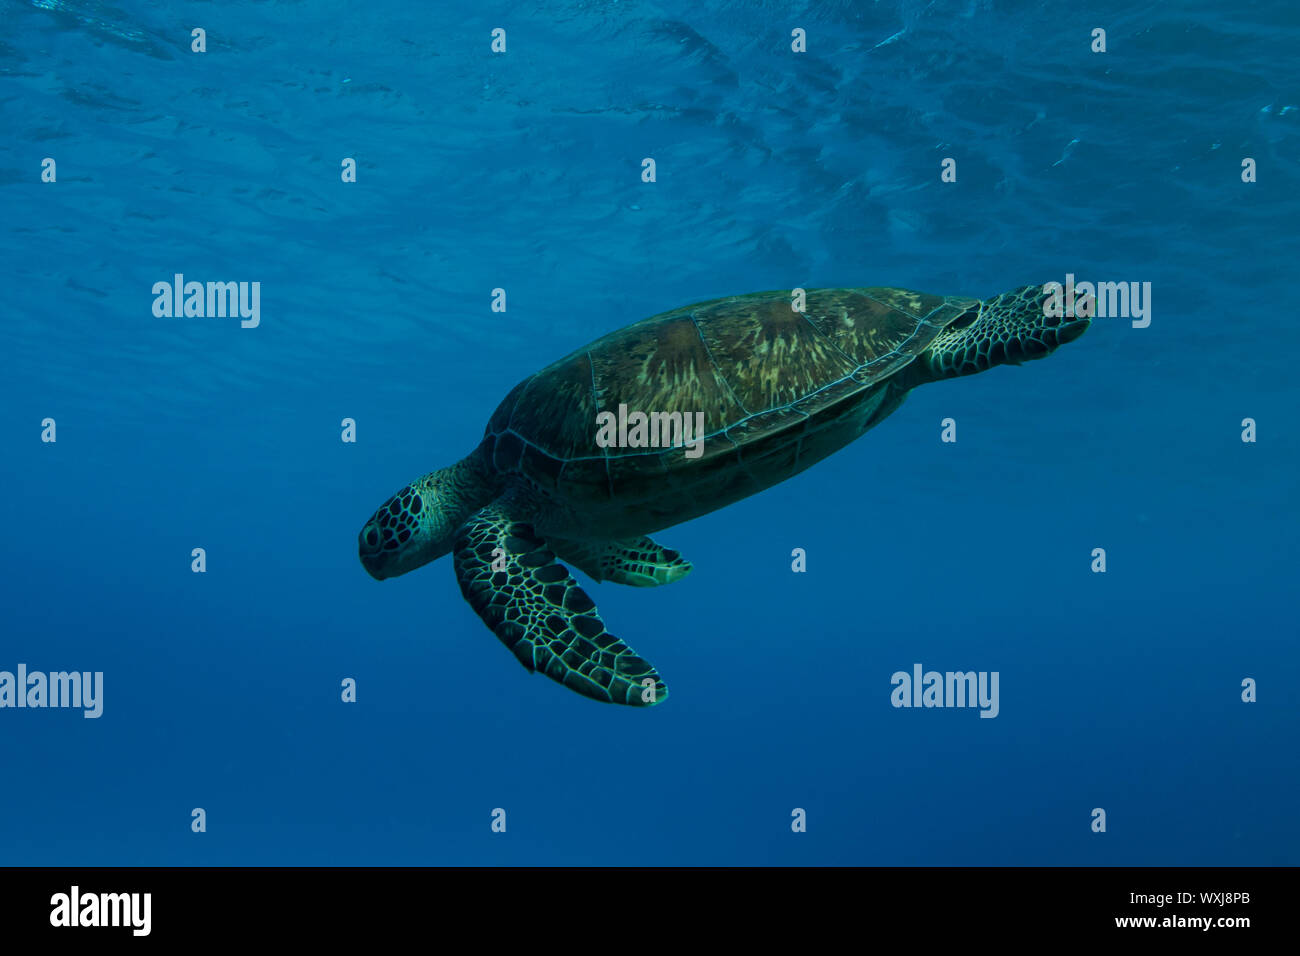 Sea turtle swimming in ocean, Lady Elliot Island, Great Barrier Reef, Queensland, Australia Stock Photo